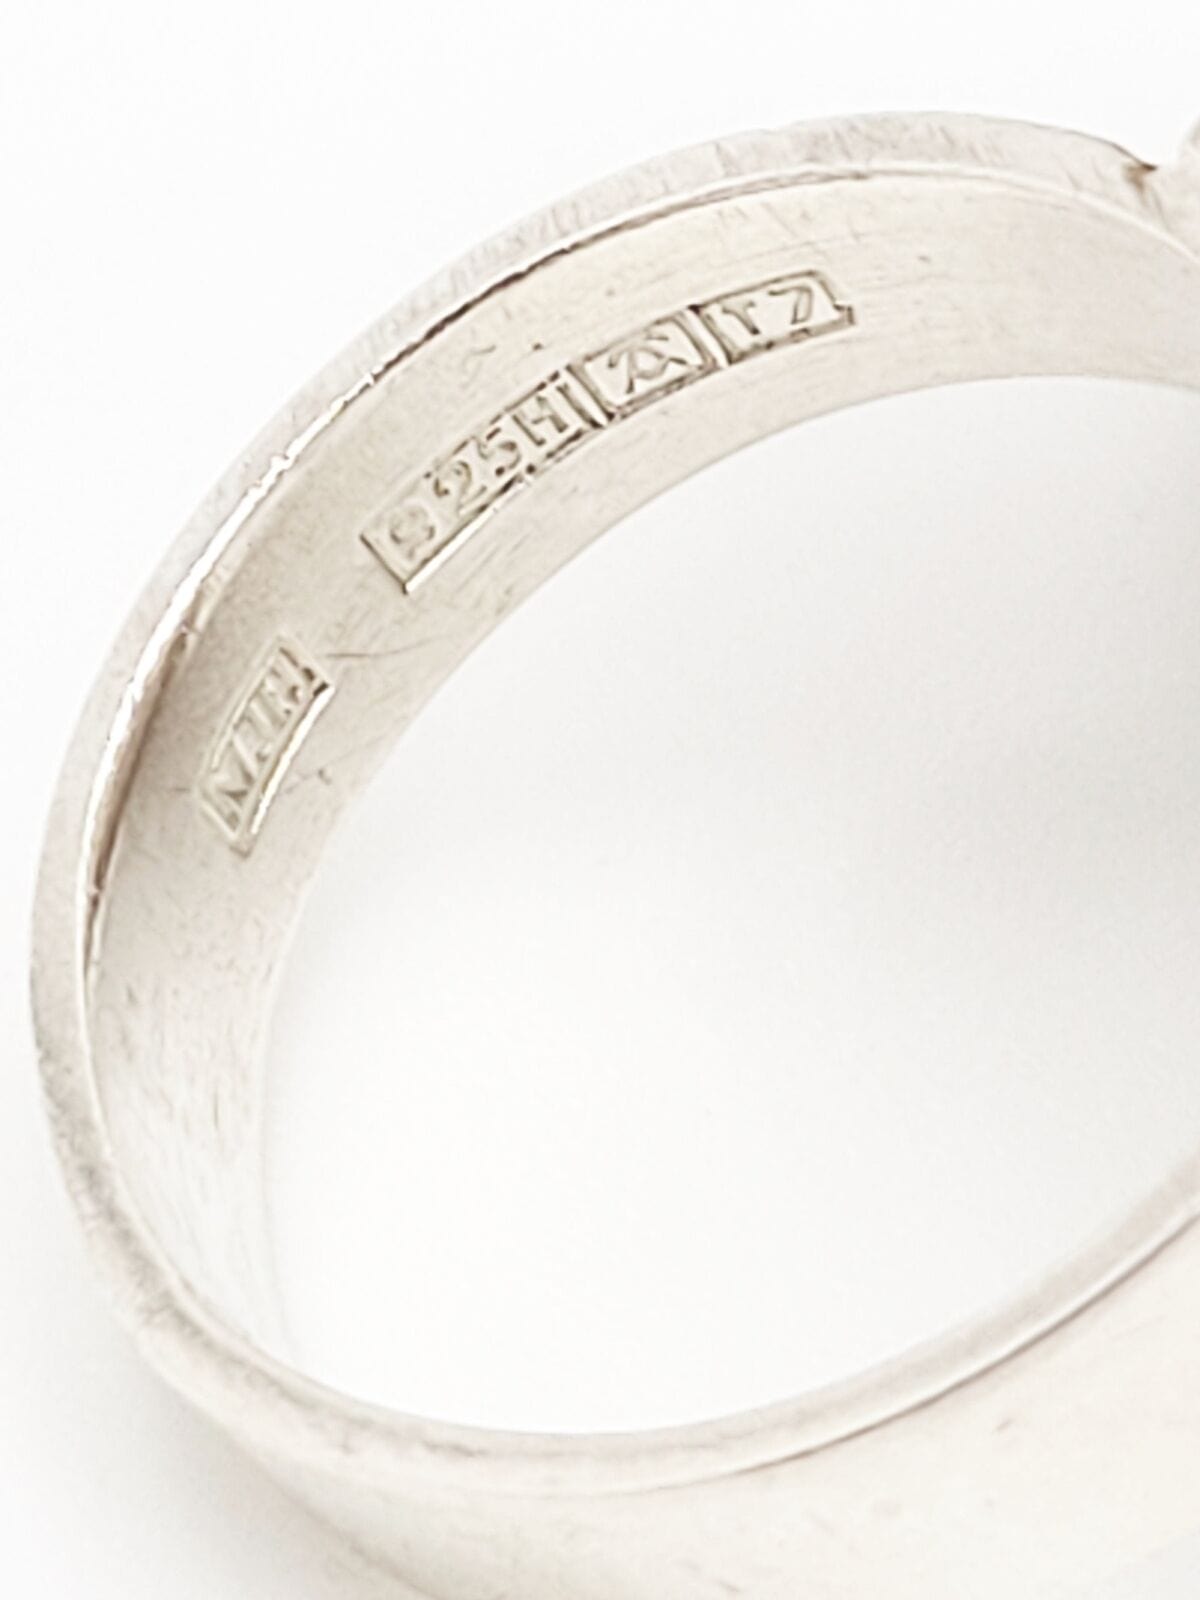 Matti J Hyvarinen Jewelry Matti J Hyvärinen Sirokoru Finland Abstract Mod Sterling Silver Ring Circa 1972